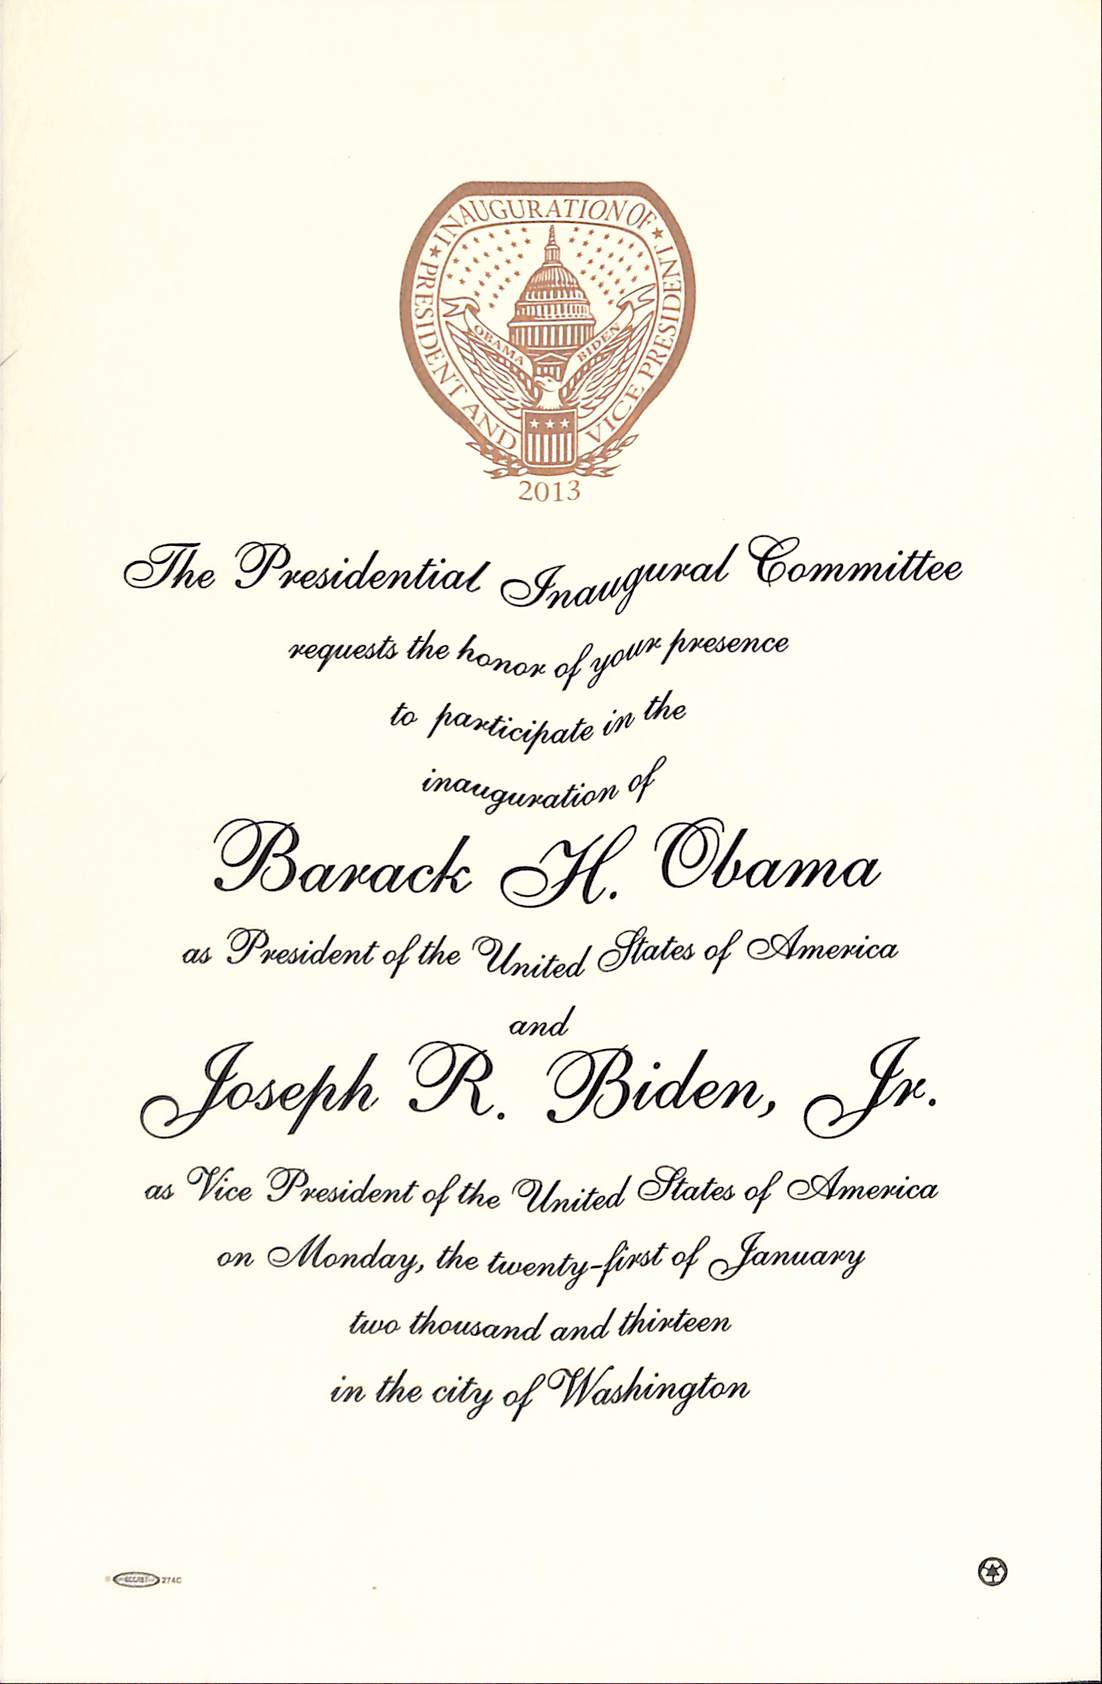 Presidential Inaugural Invitations and Memorabilia from 2009-2013